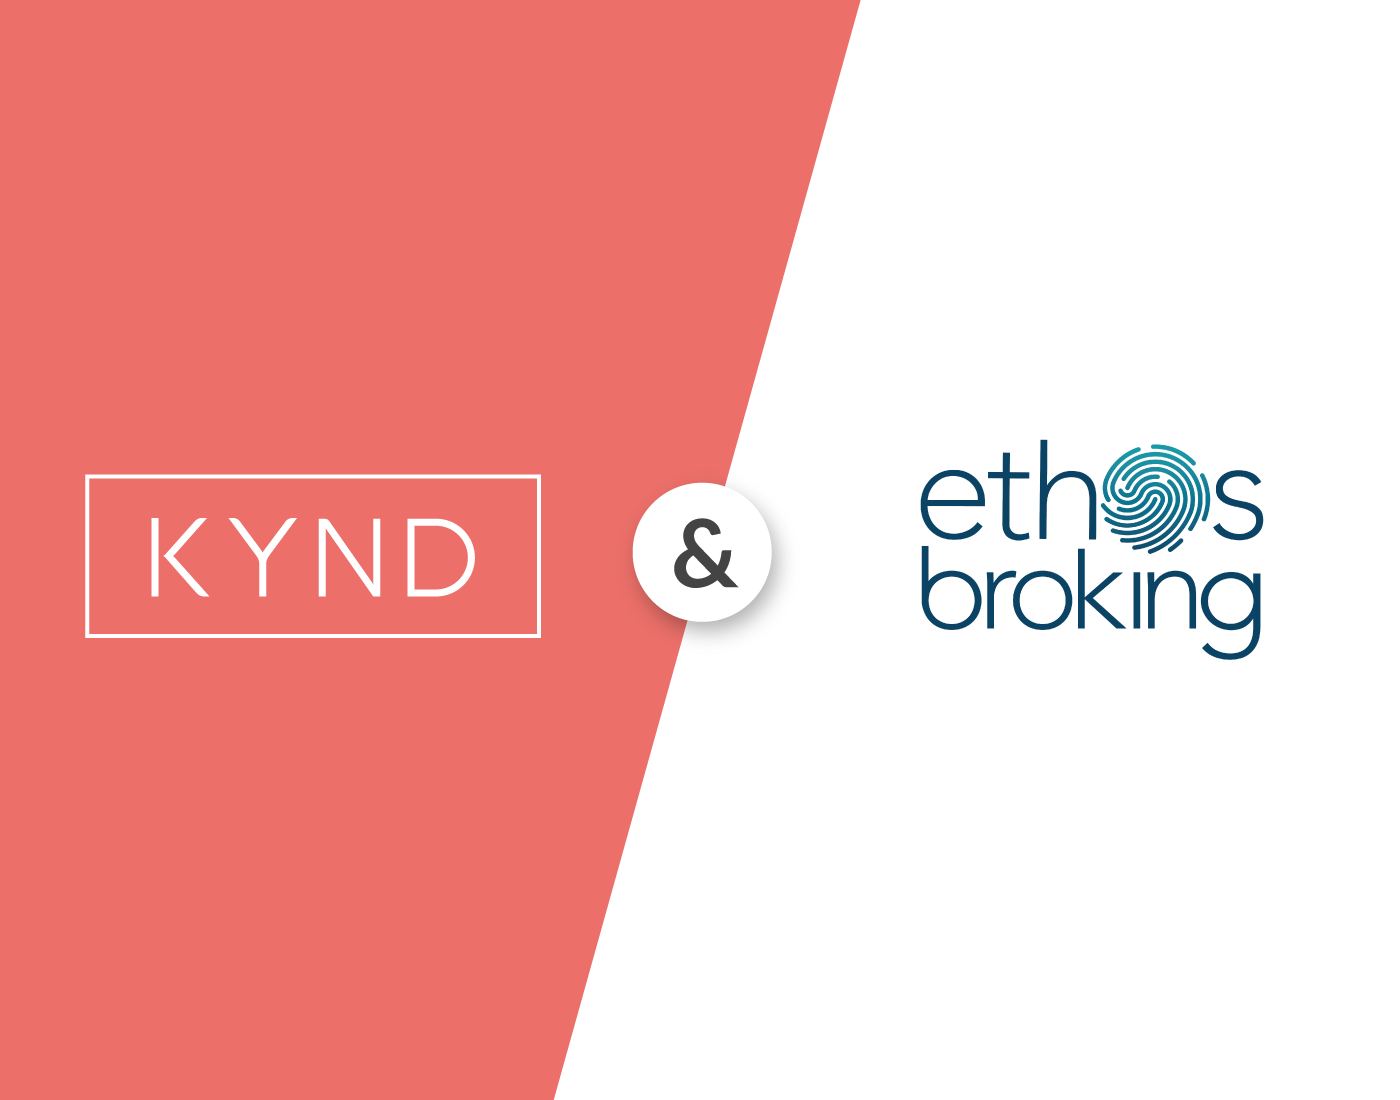 KYND and Ethos Broking Partnership